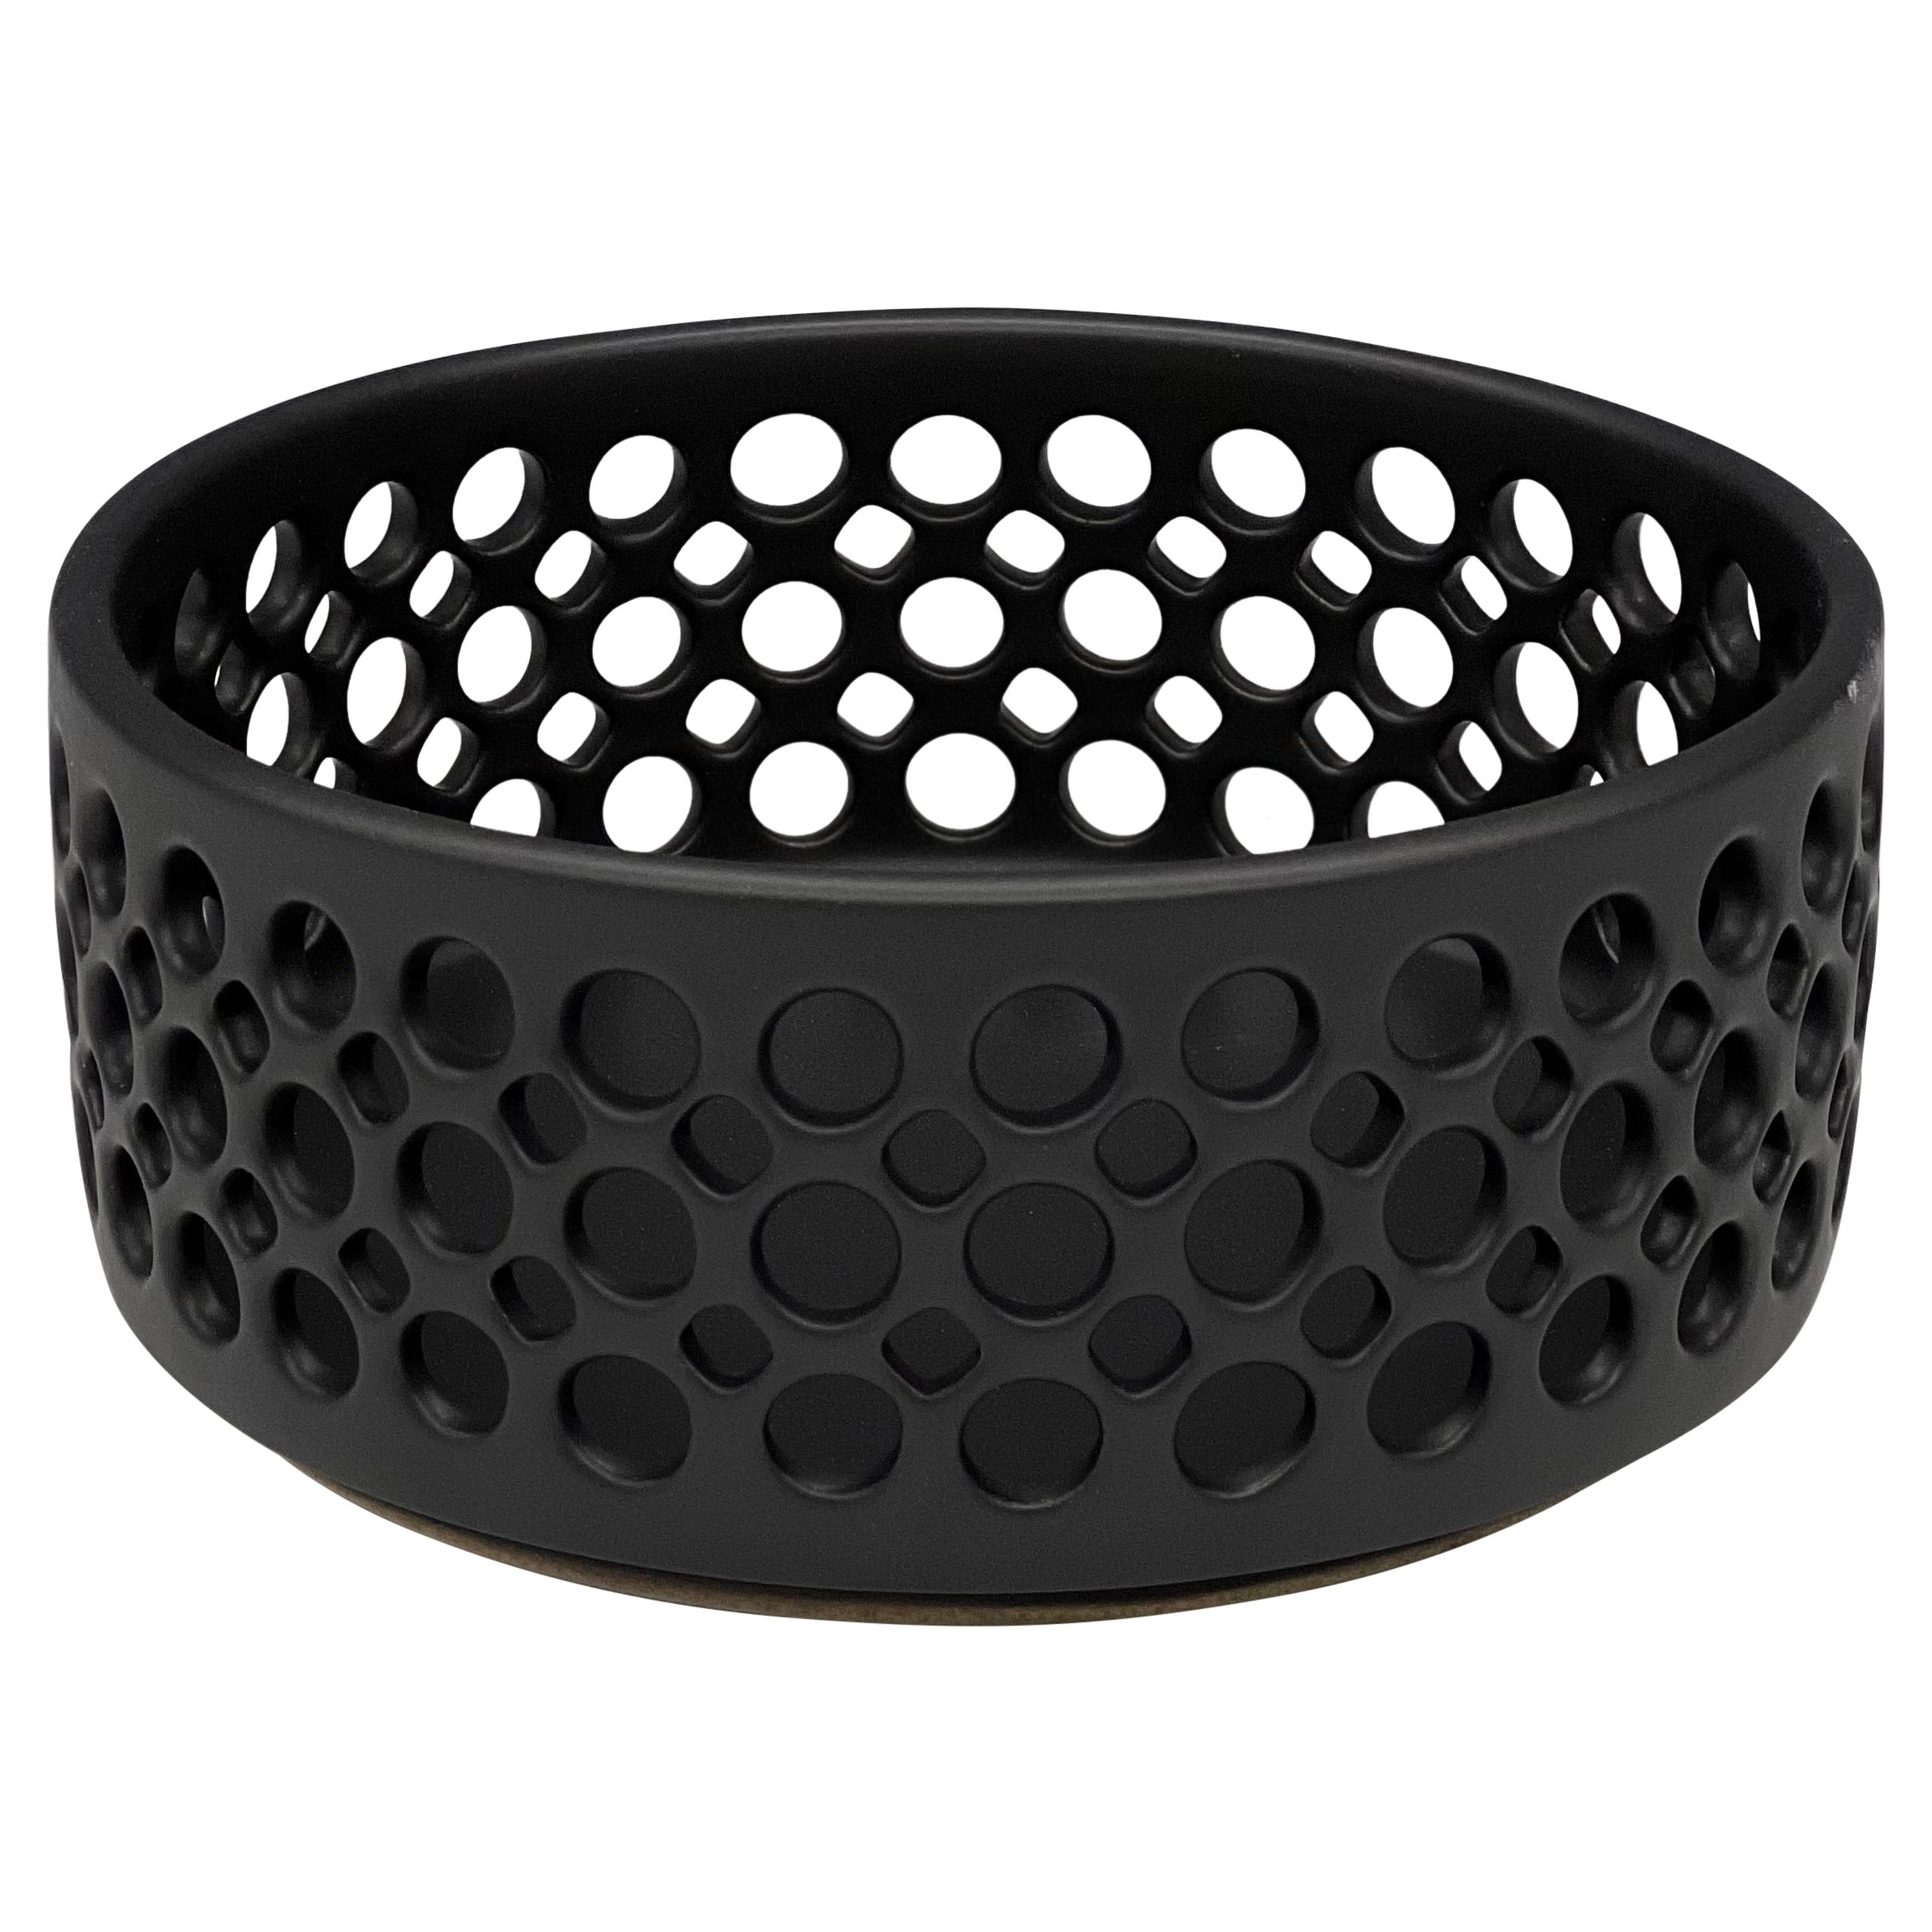  Black Satin Pierced Cylindrical Ceramic Bowl  For Sale